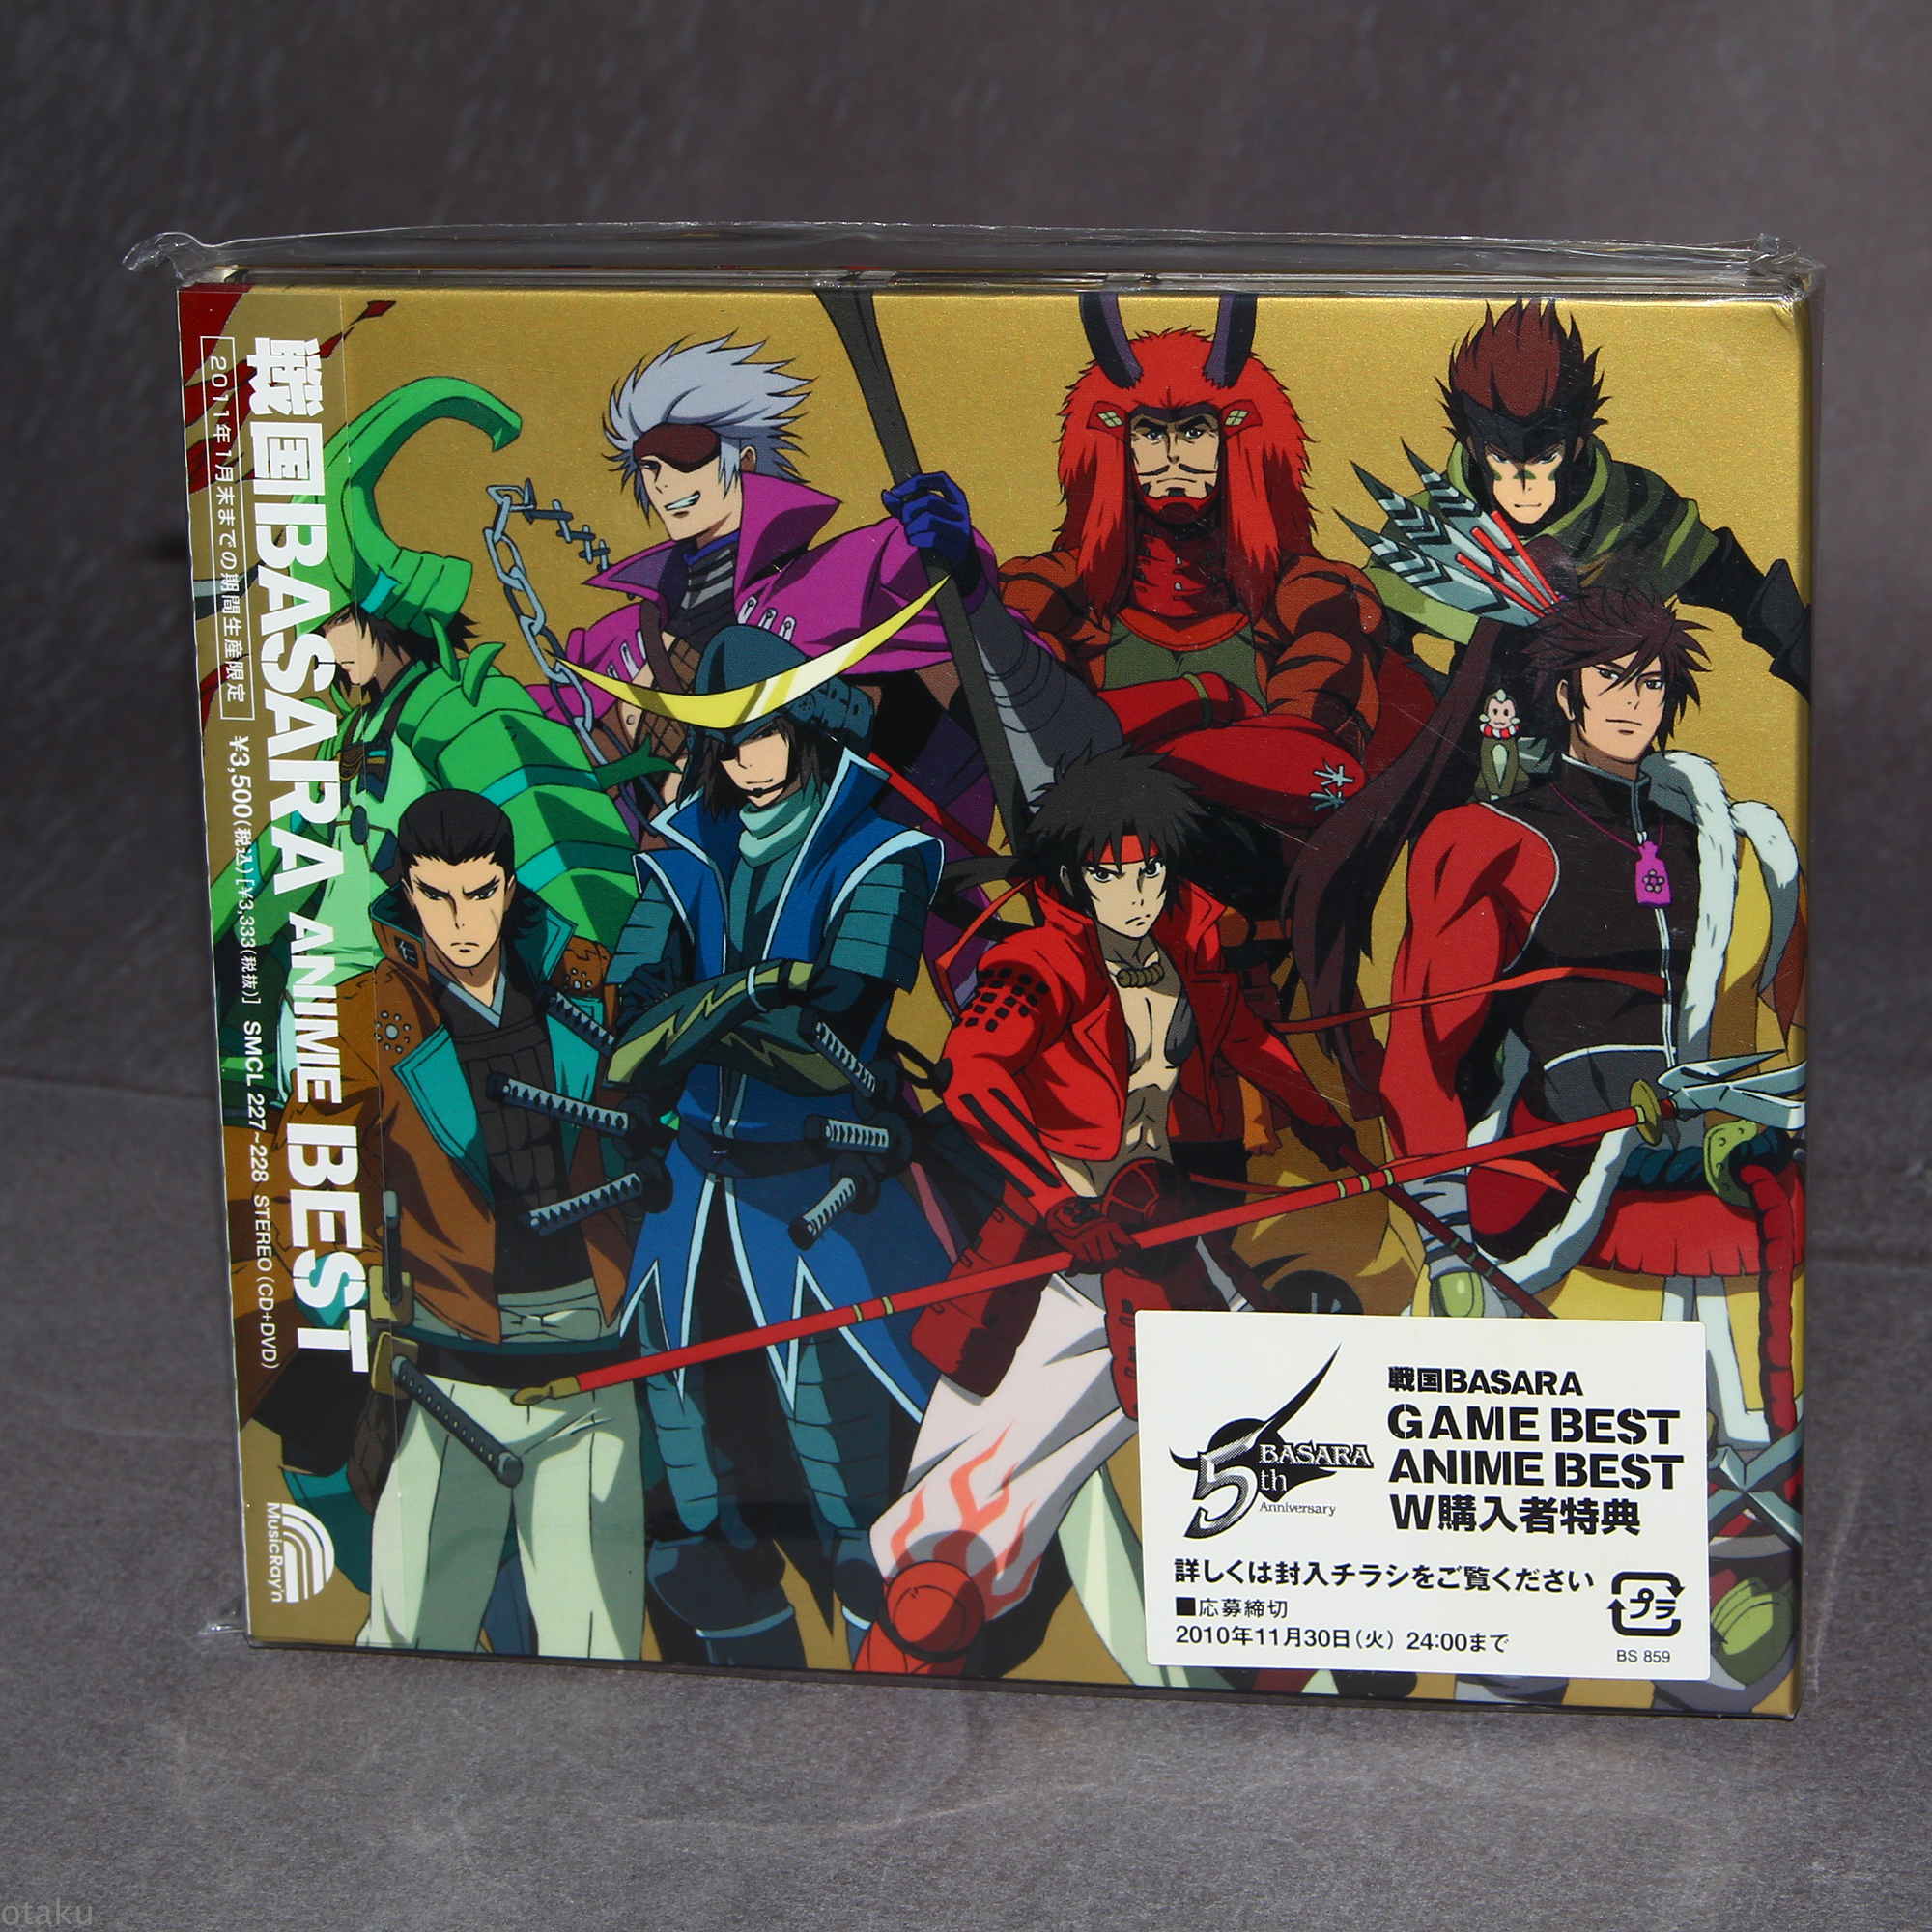 Sengoku Basara Anime Best Cd And Dvd Limited Edition